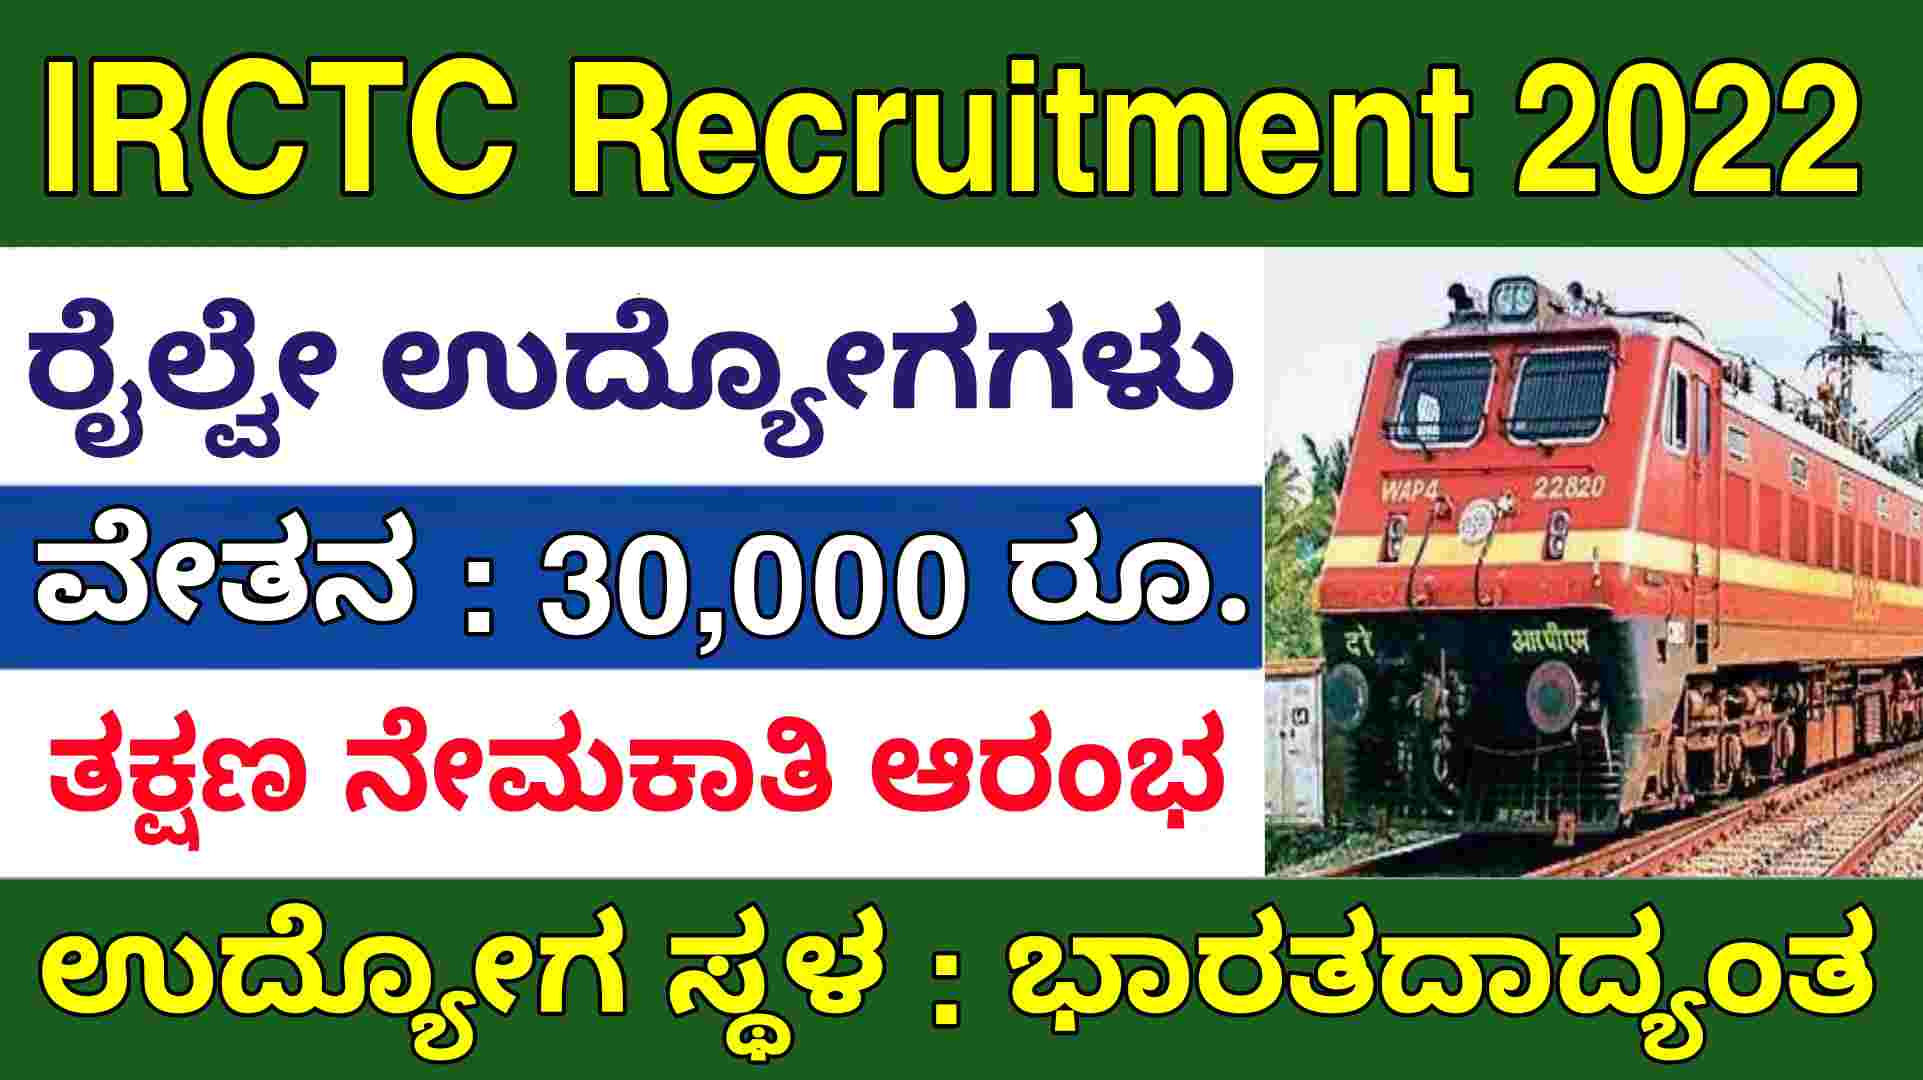 IRCTC recruitment 2022